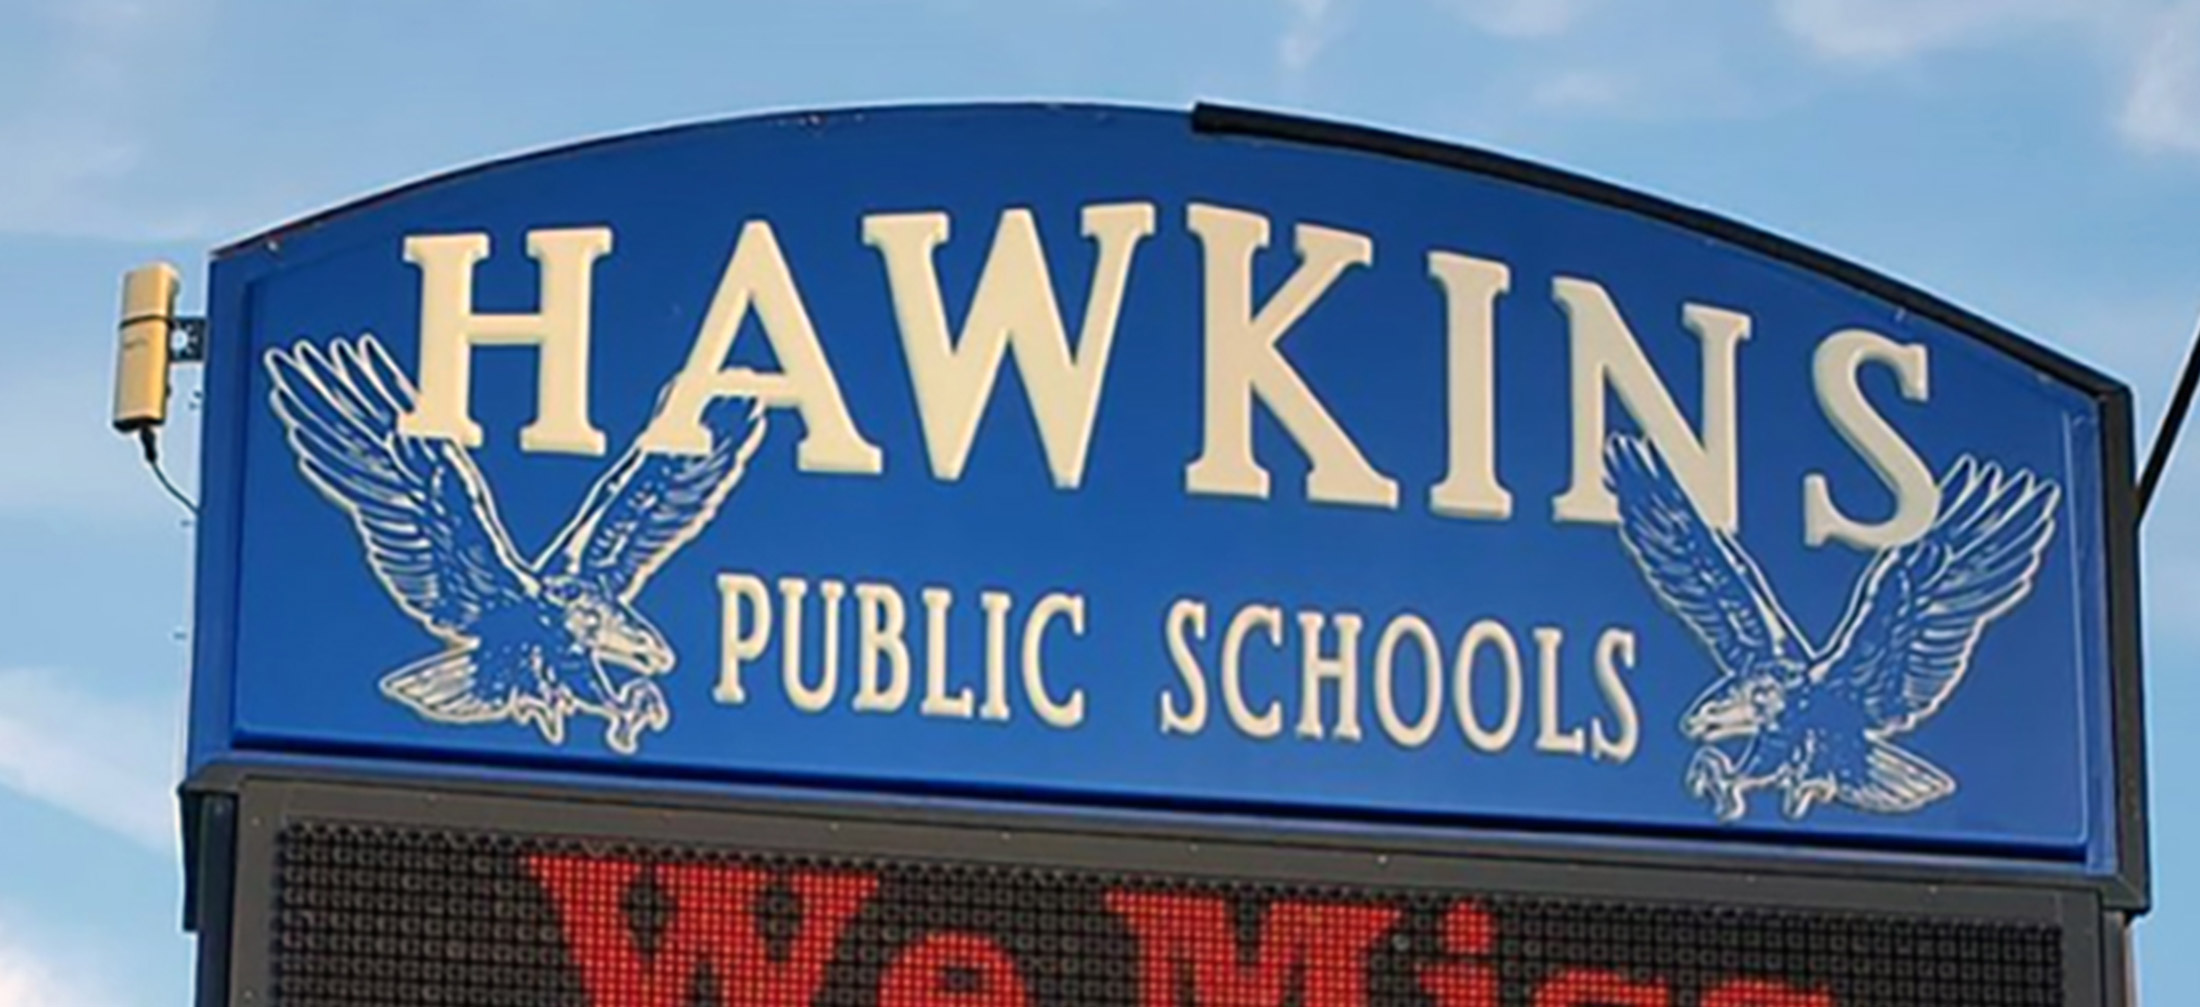 hawkins public schools